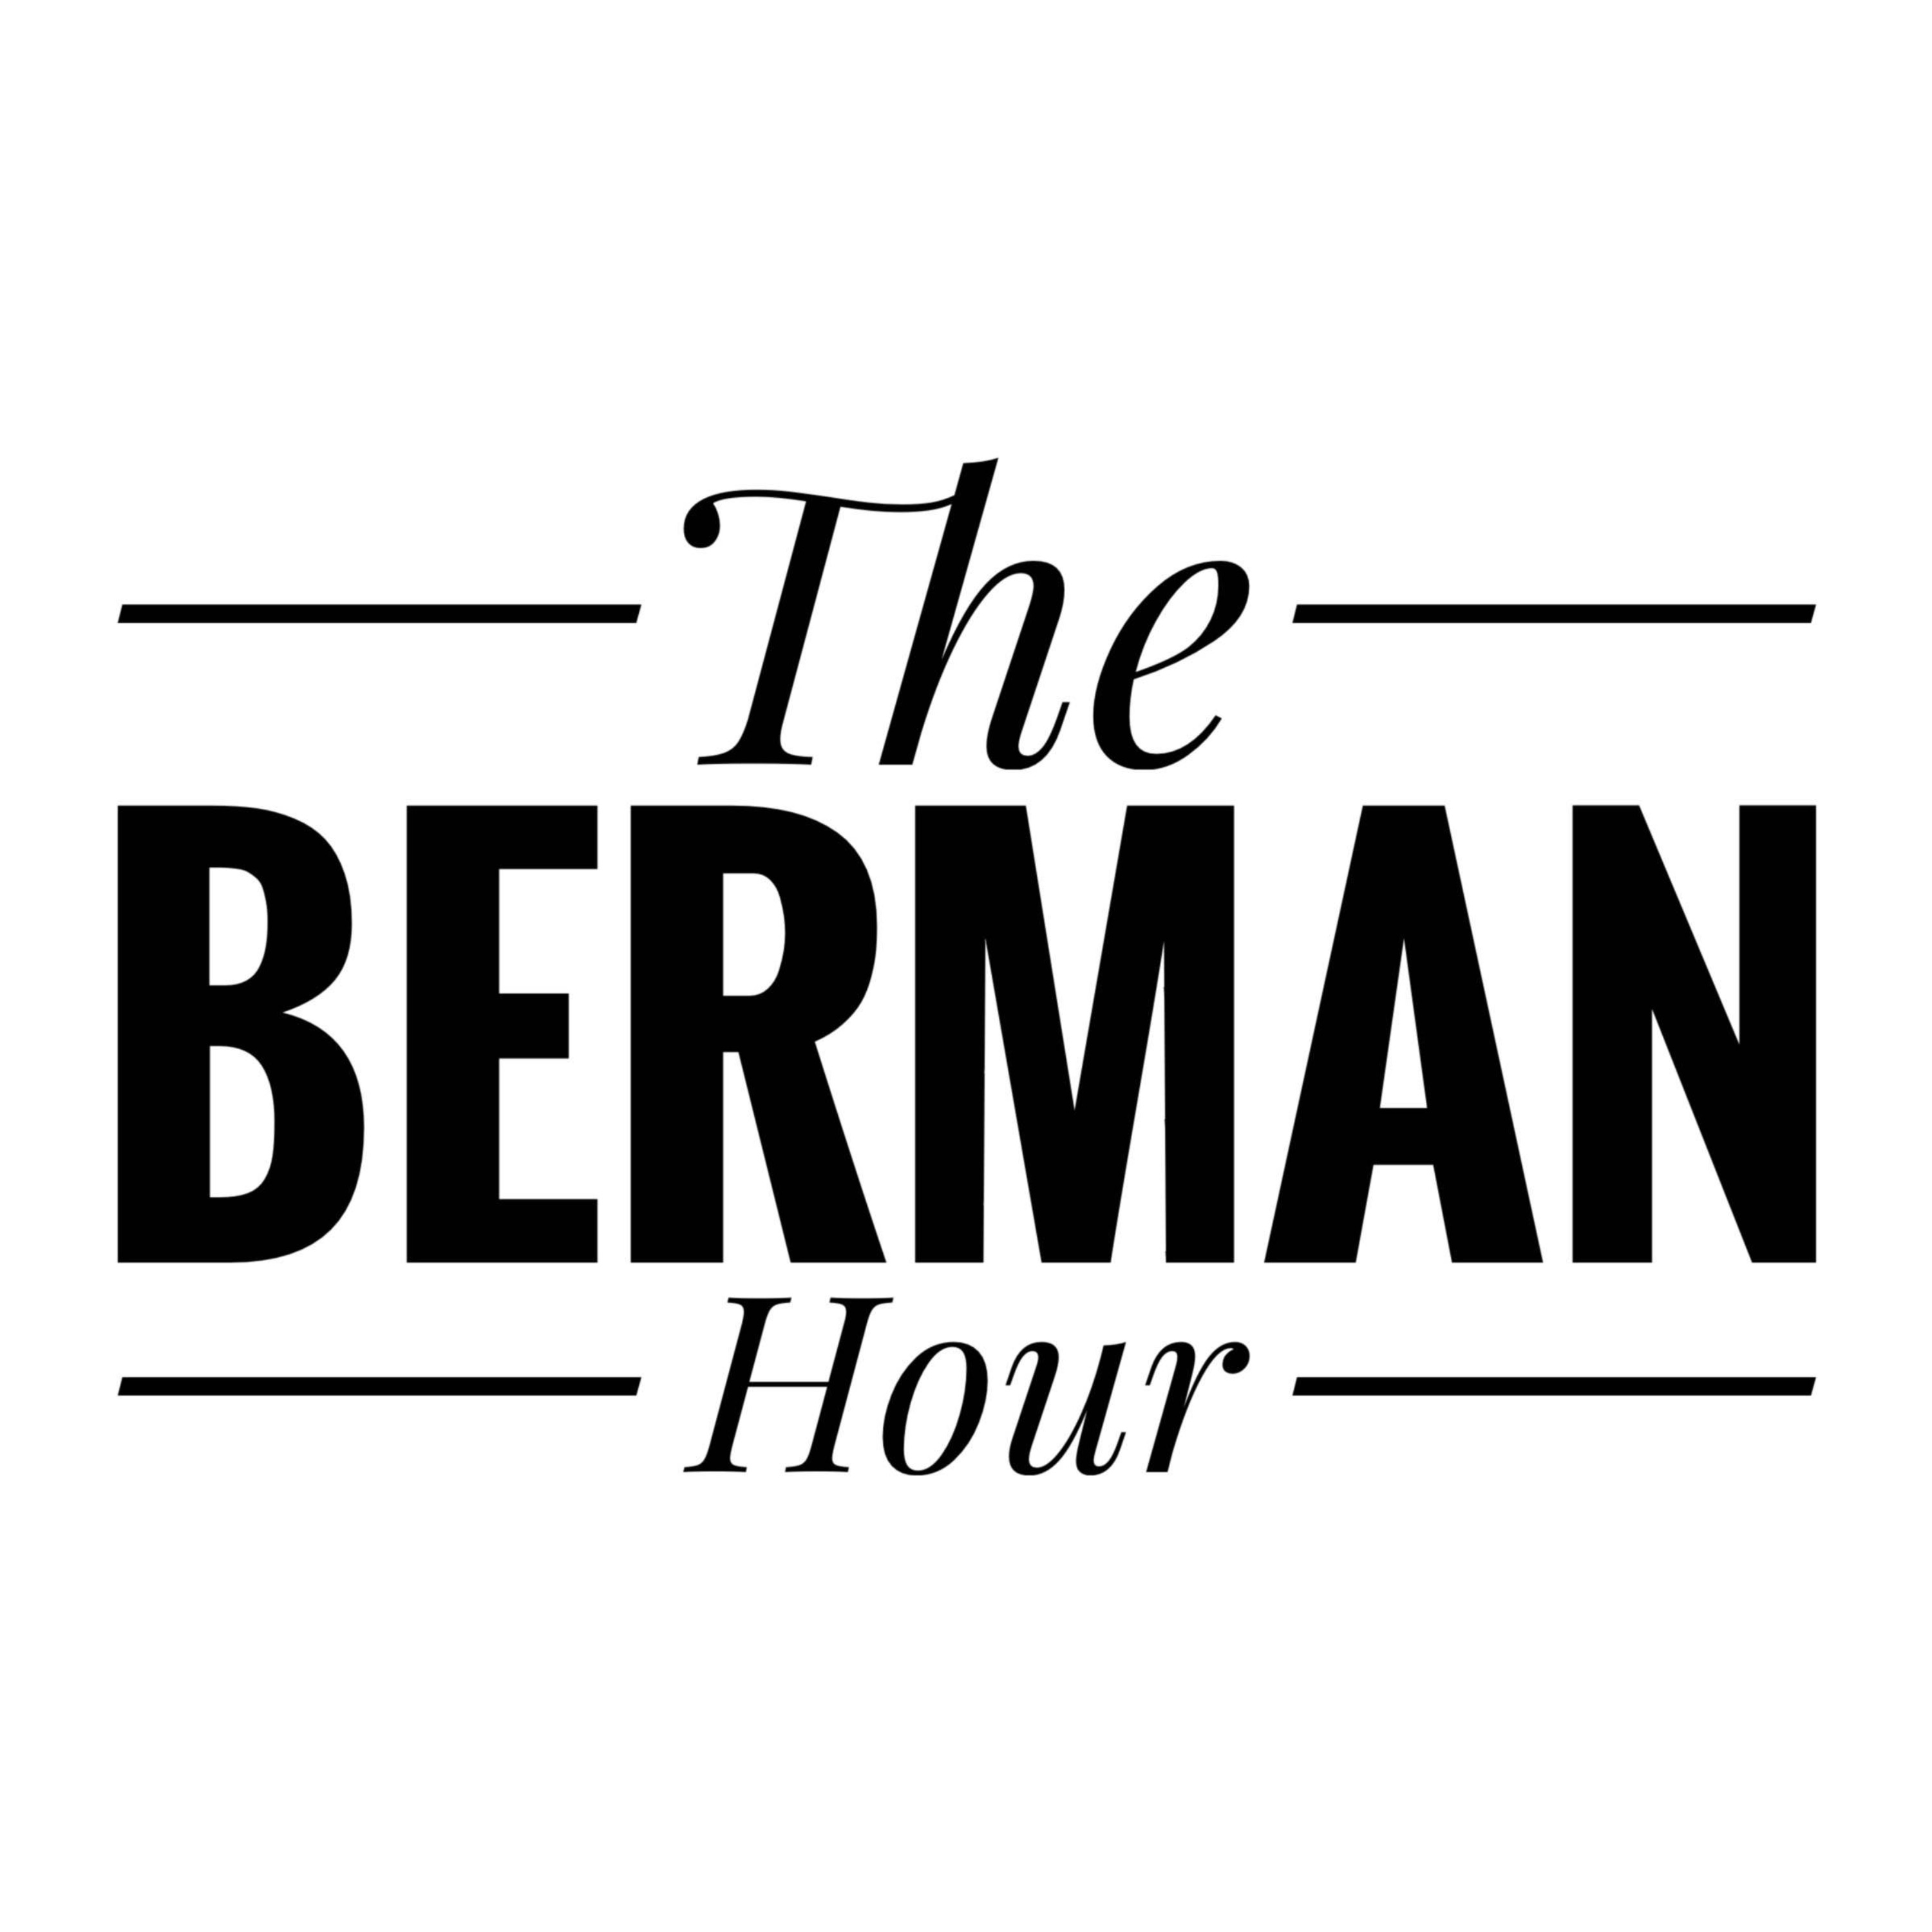 The Berman Hour